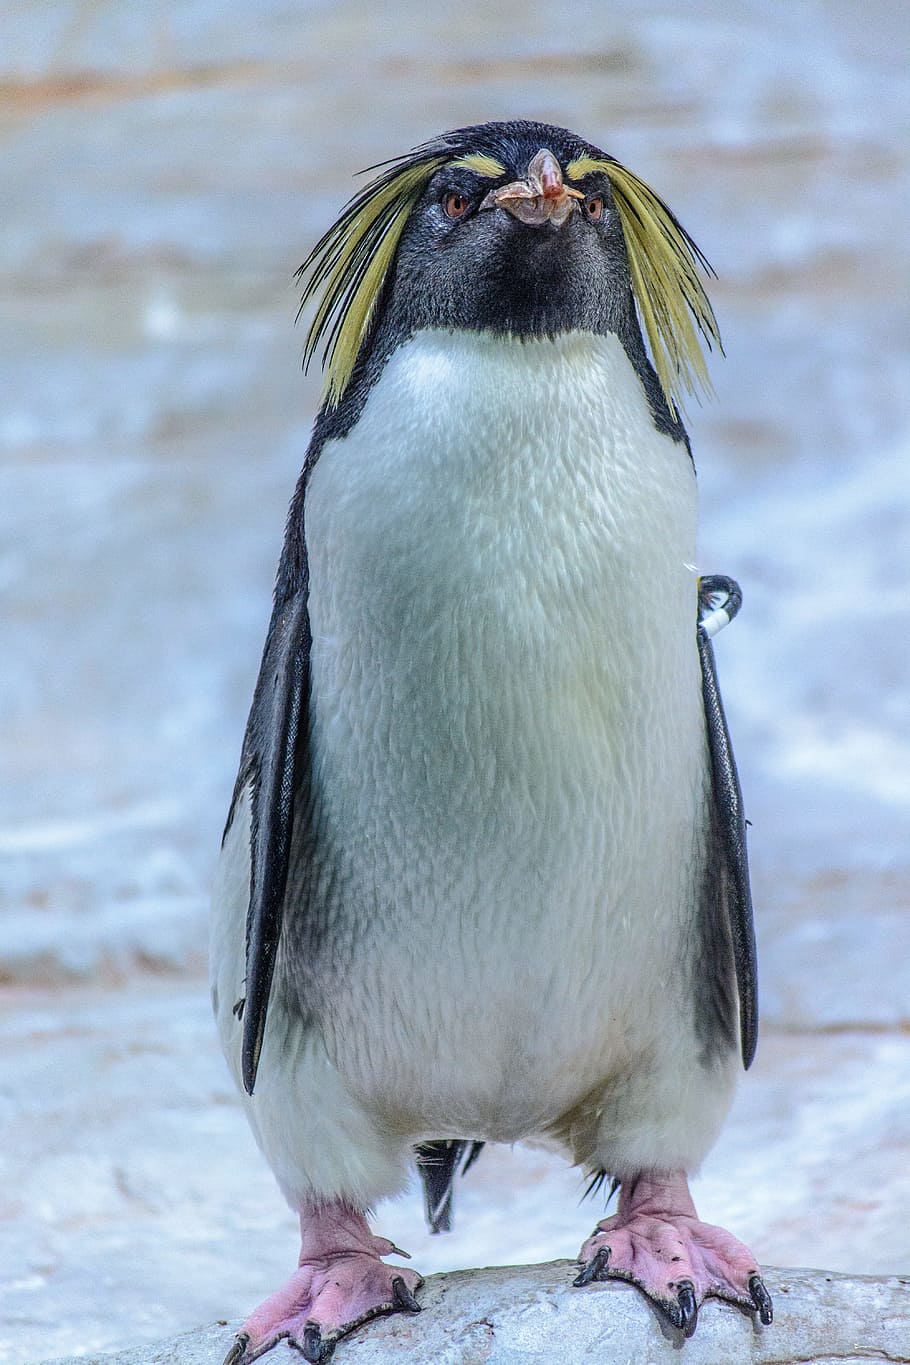 white penguin, penguin, animal, bird, animal world, zoo, bill, water bird, wildlife photography, close